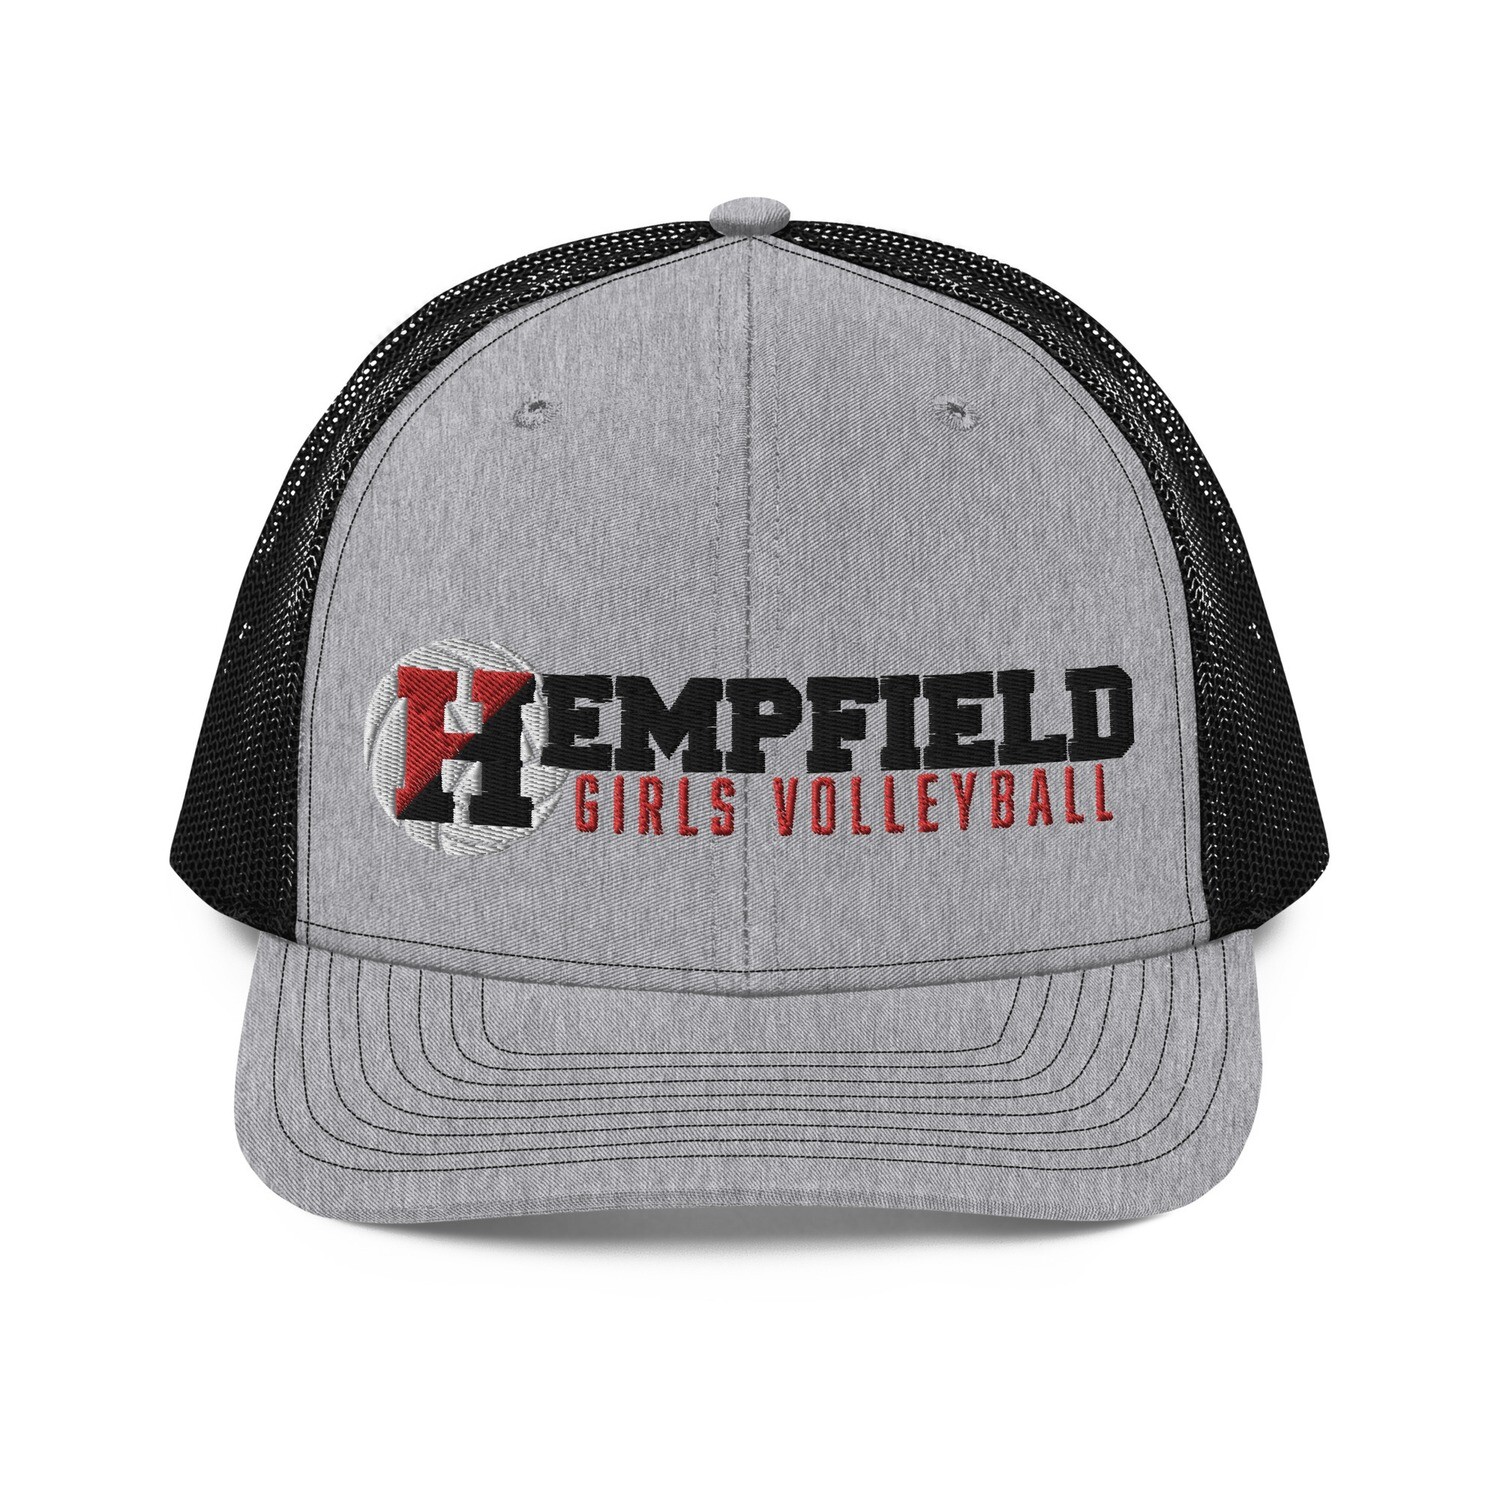 Hempfield Girls Volleyball Embroidered Trucker Cap